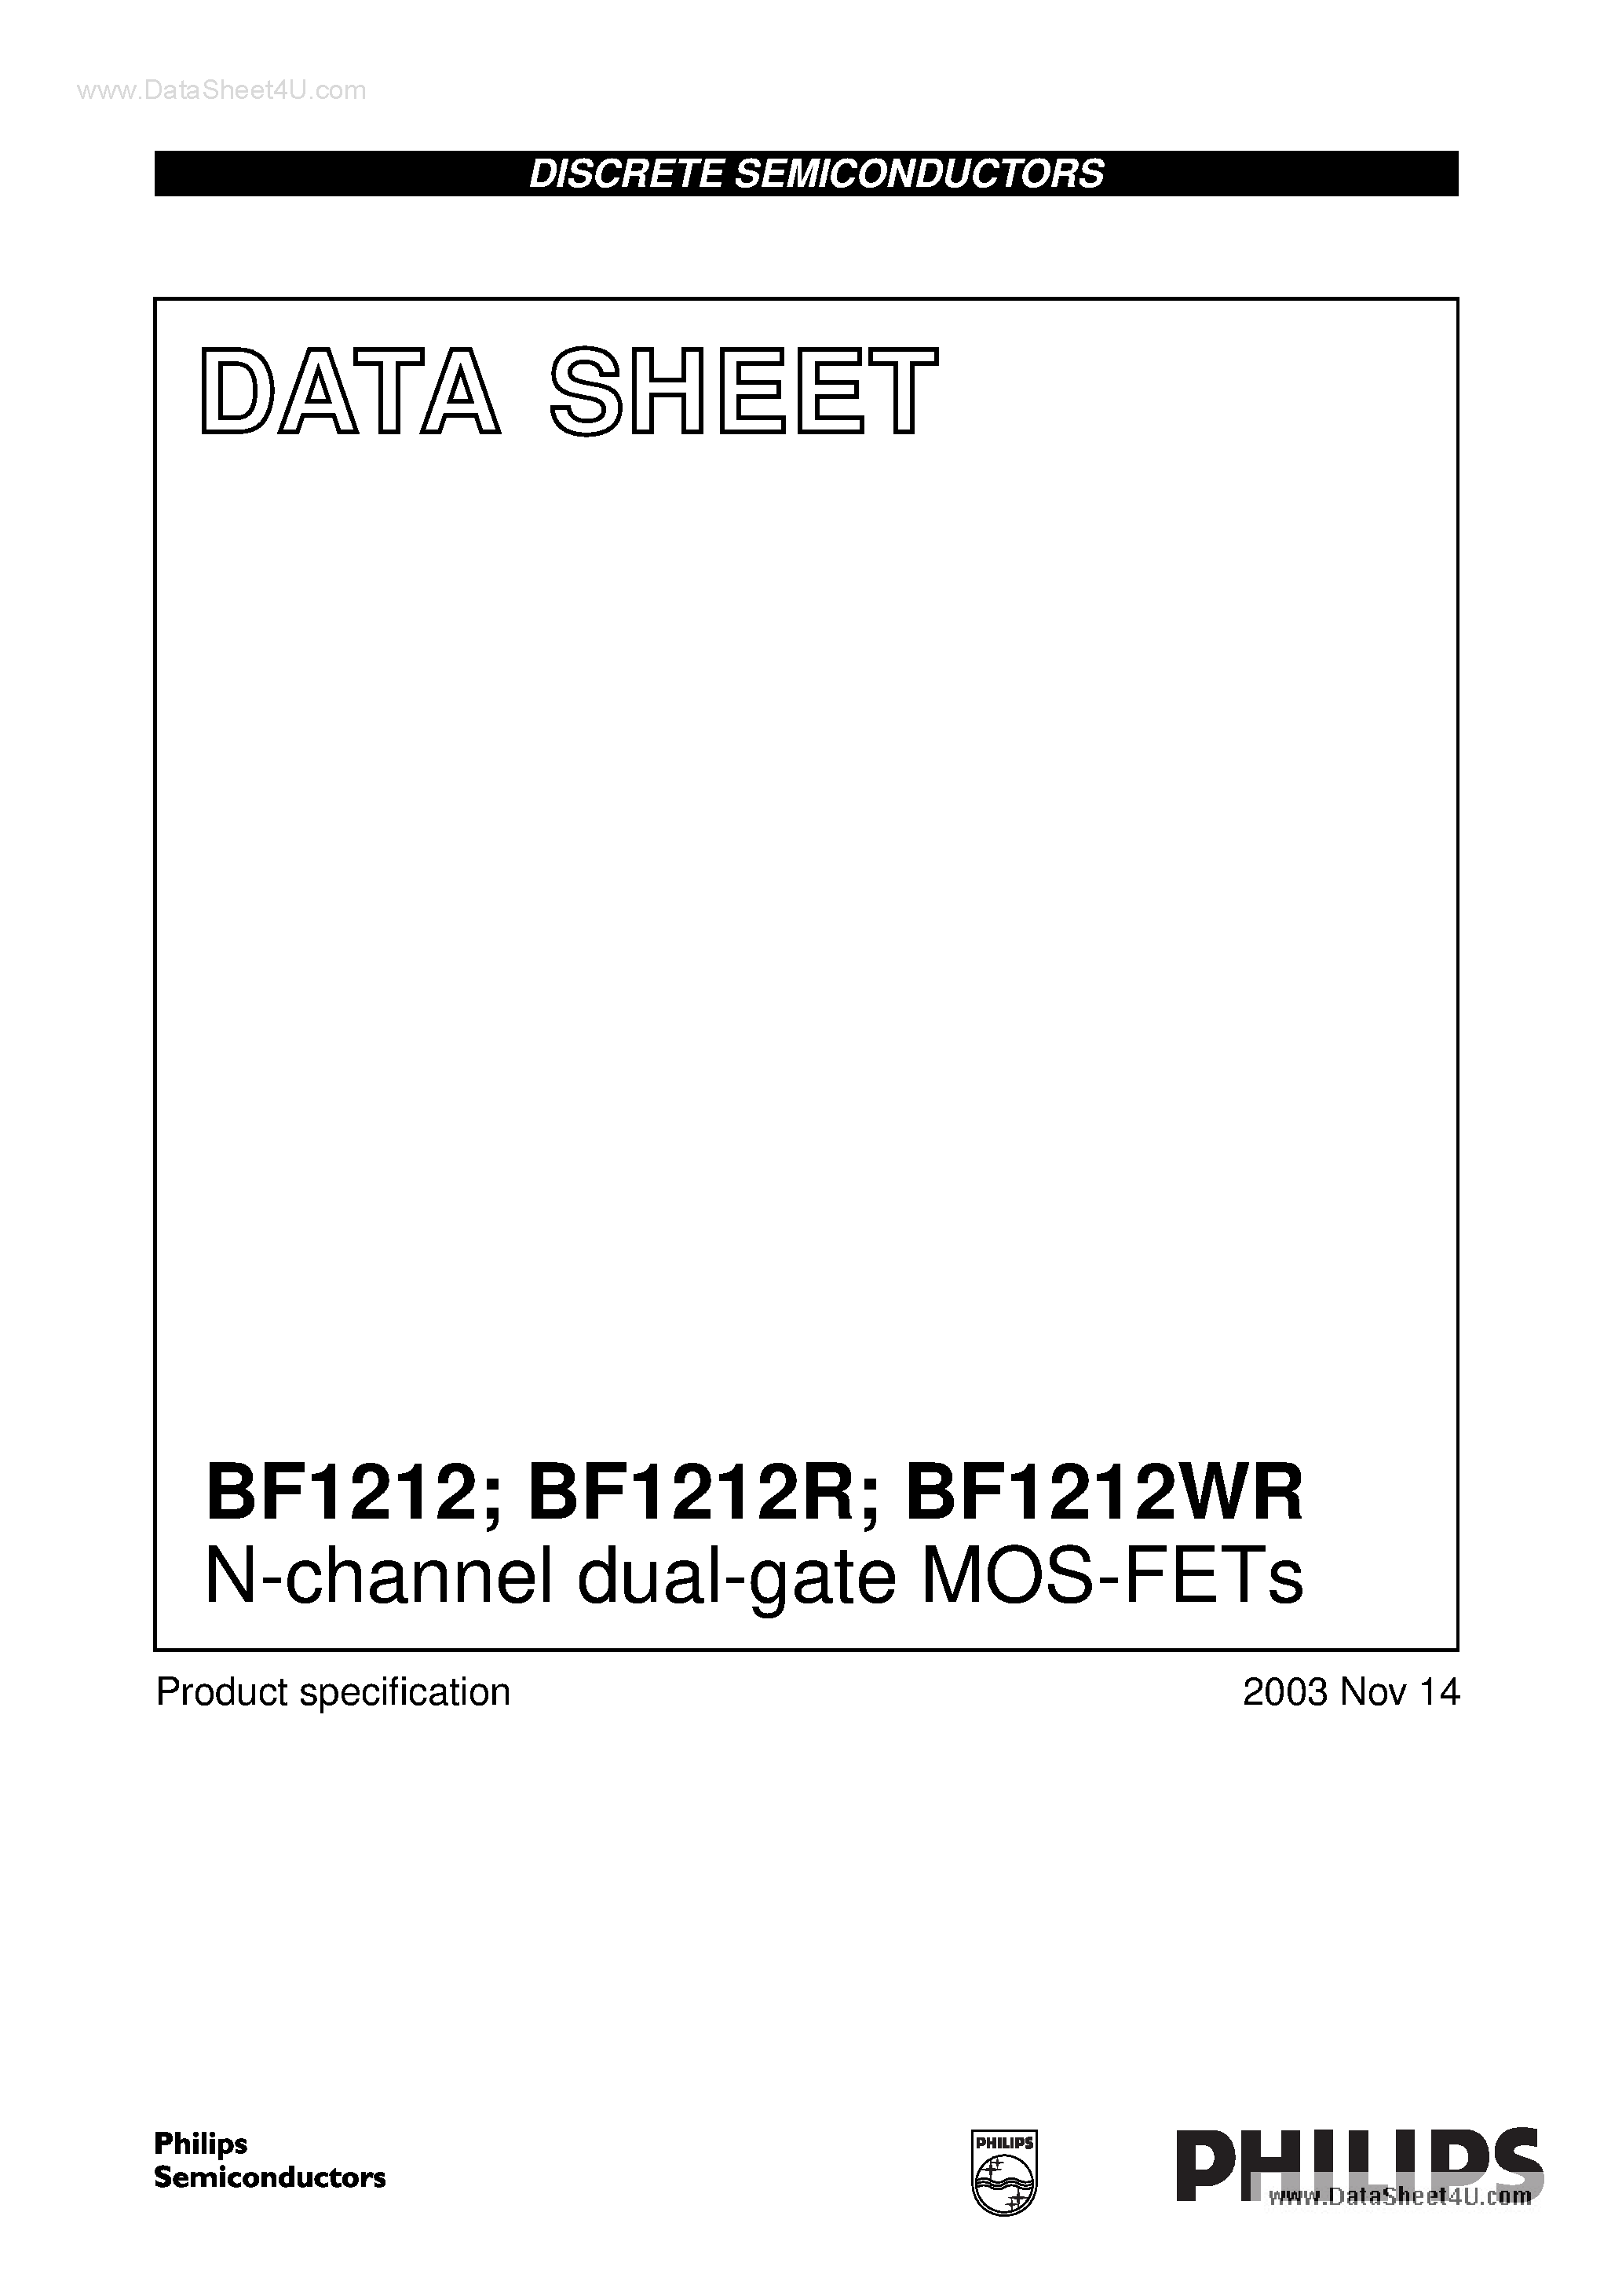 Даташит BF1212 - N-channel dual-gate MOS-FETs страница 1